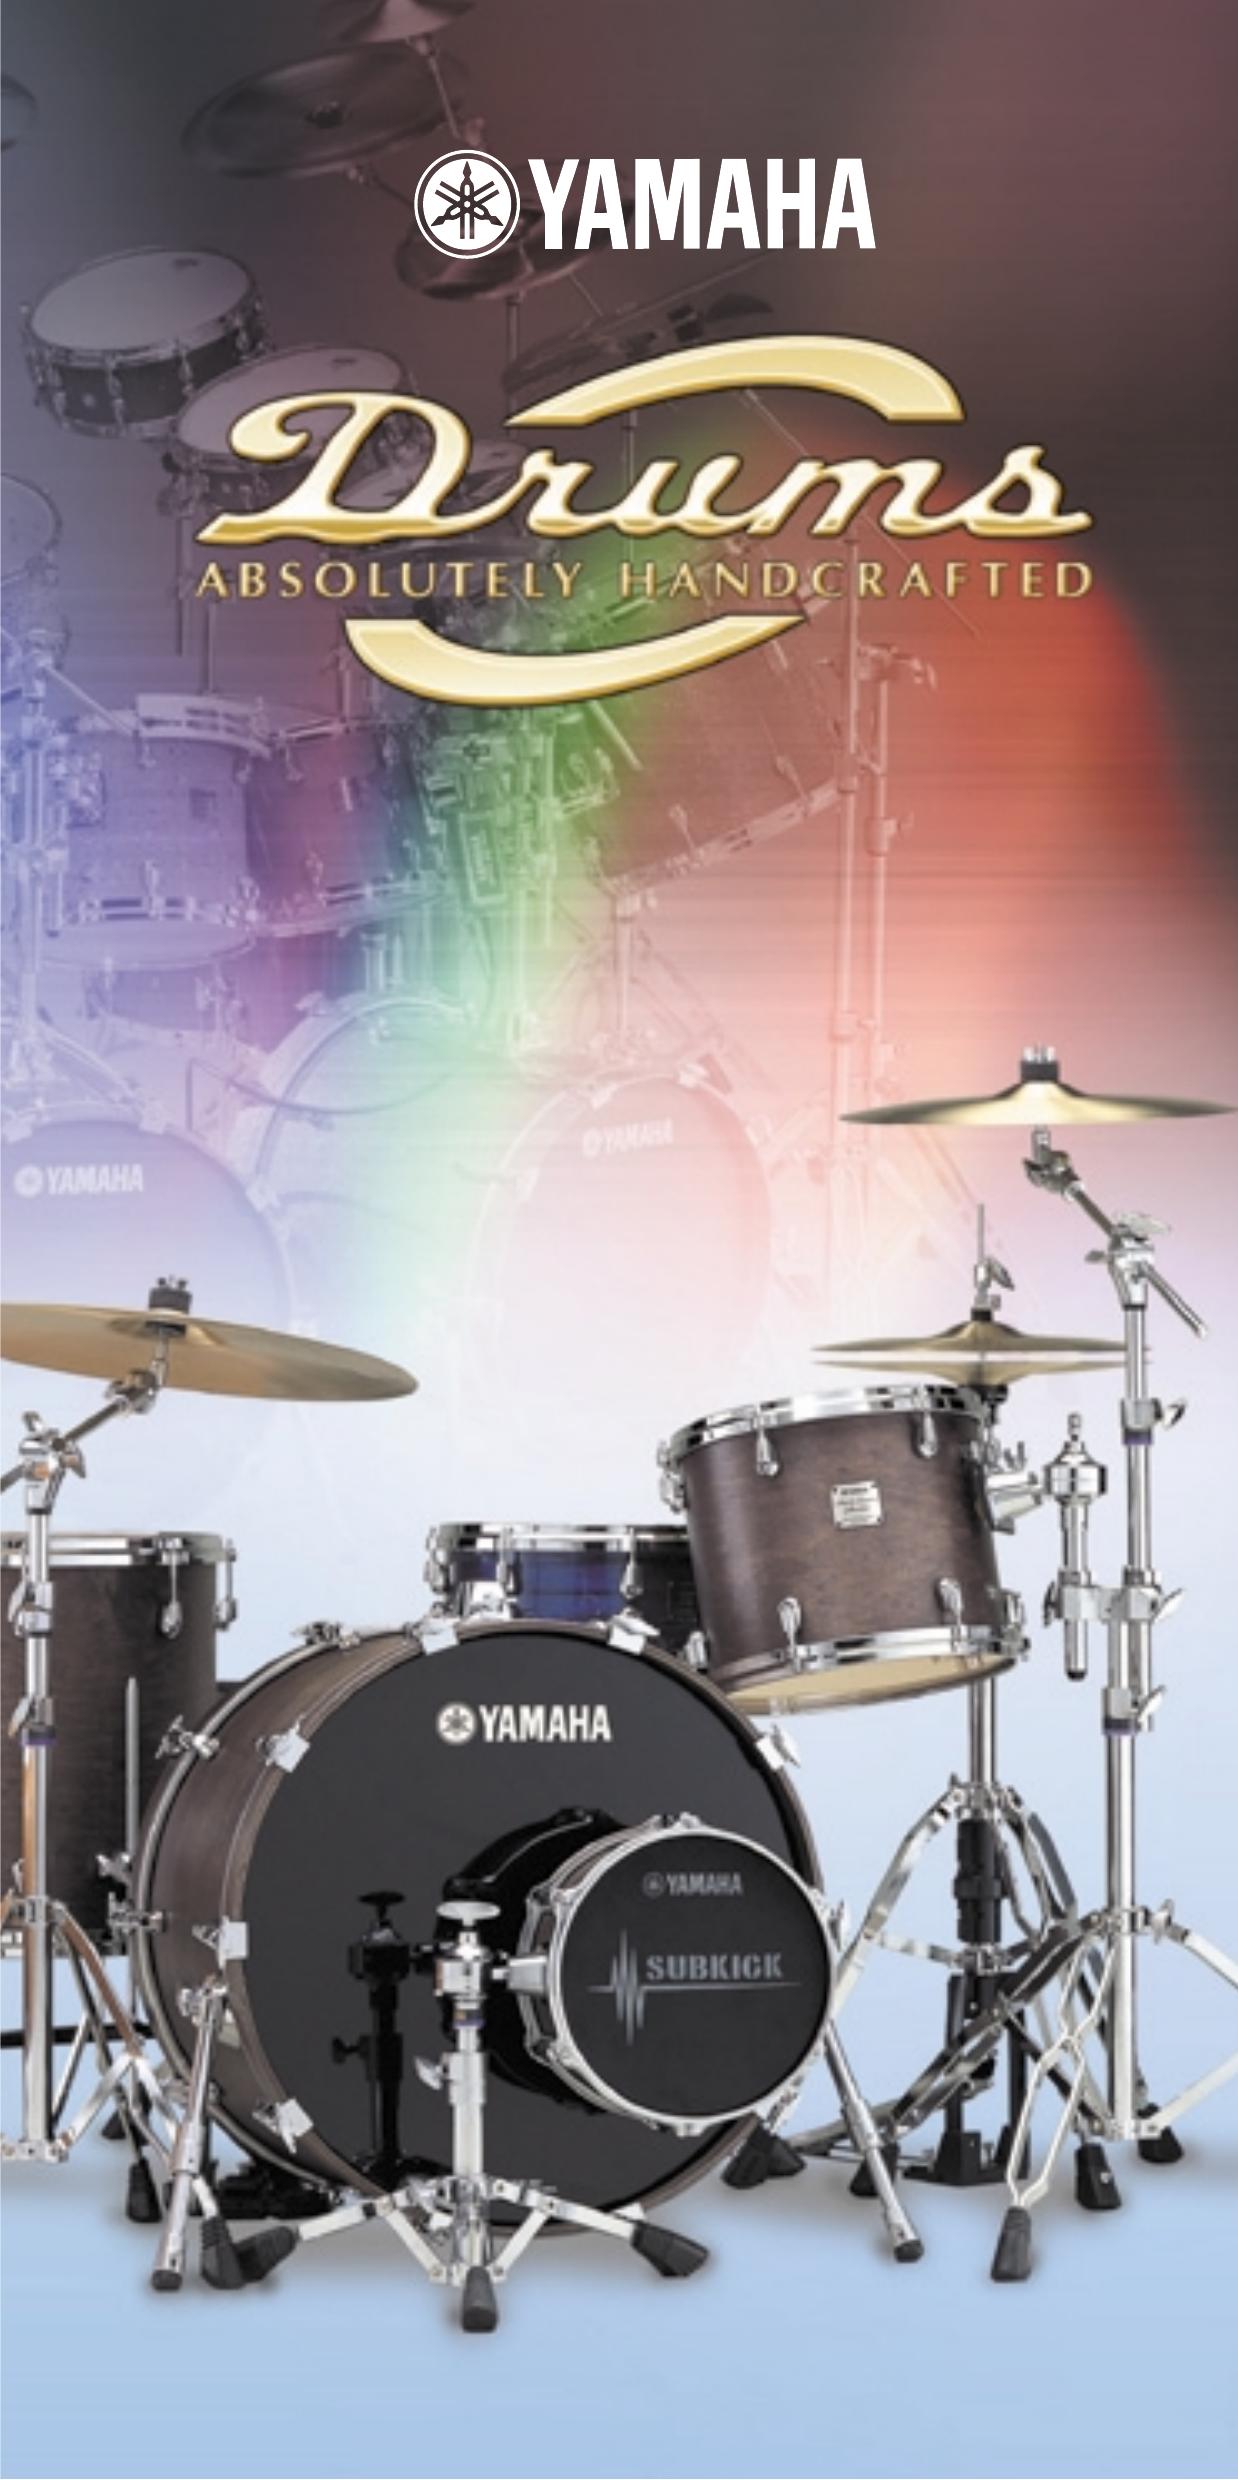 Yamaha ATT1510U Drums User Manual